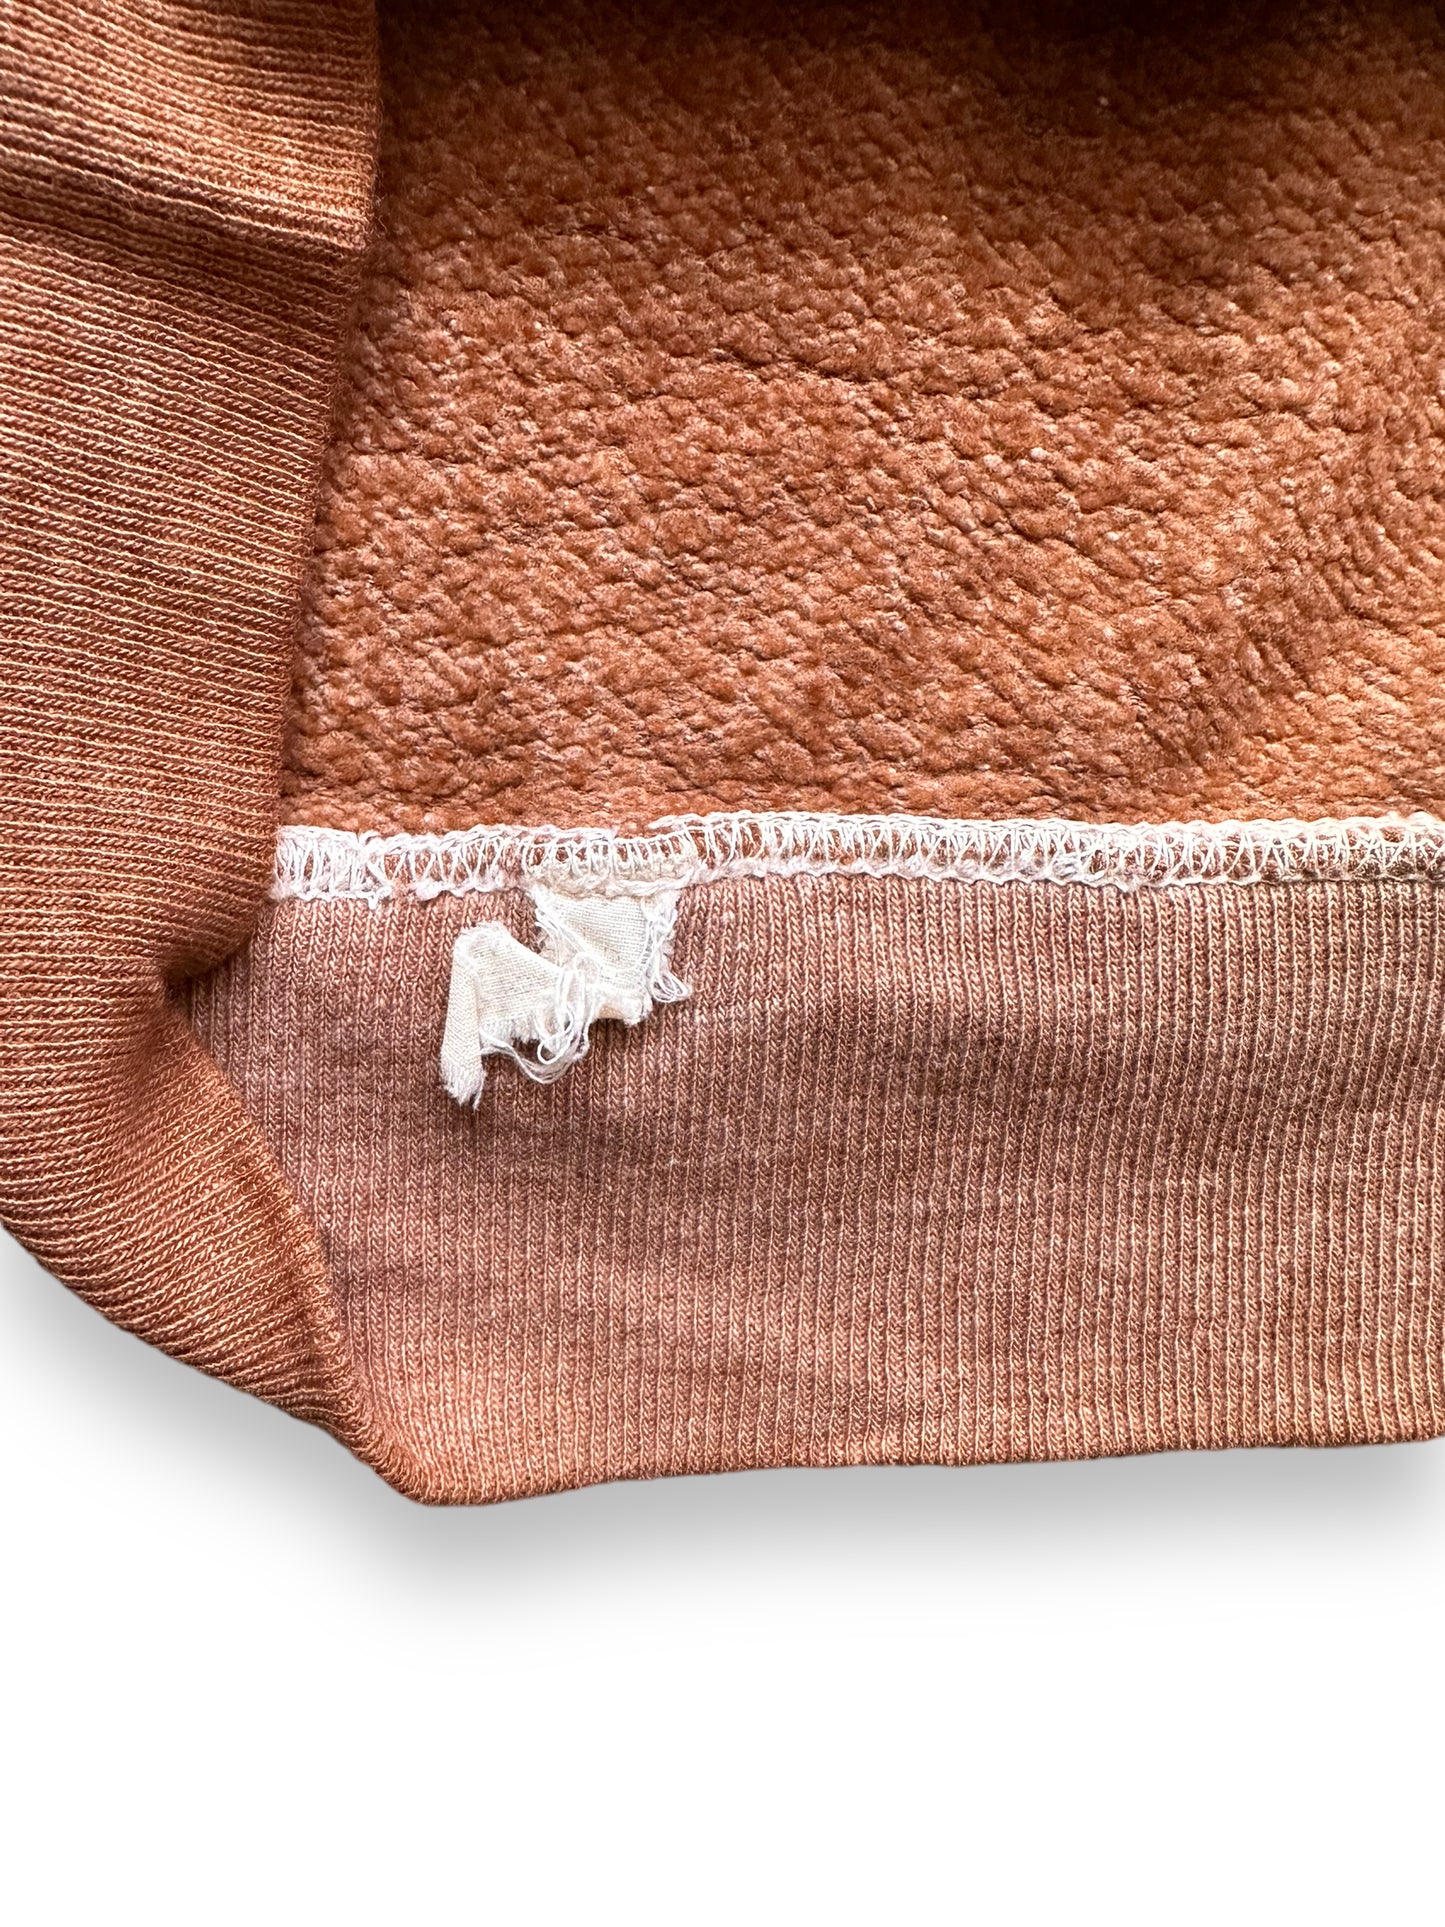 Obliterated Tag View of Vintage Brown Short Sleeve Crewneck Sweatshirt SZ M | Barn Owl Vintage Clothing | Seattle Vintage Sweatshirts